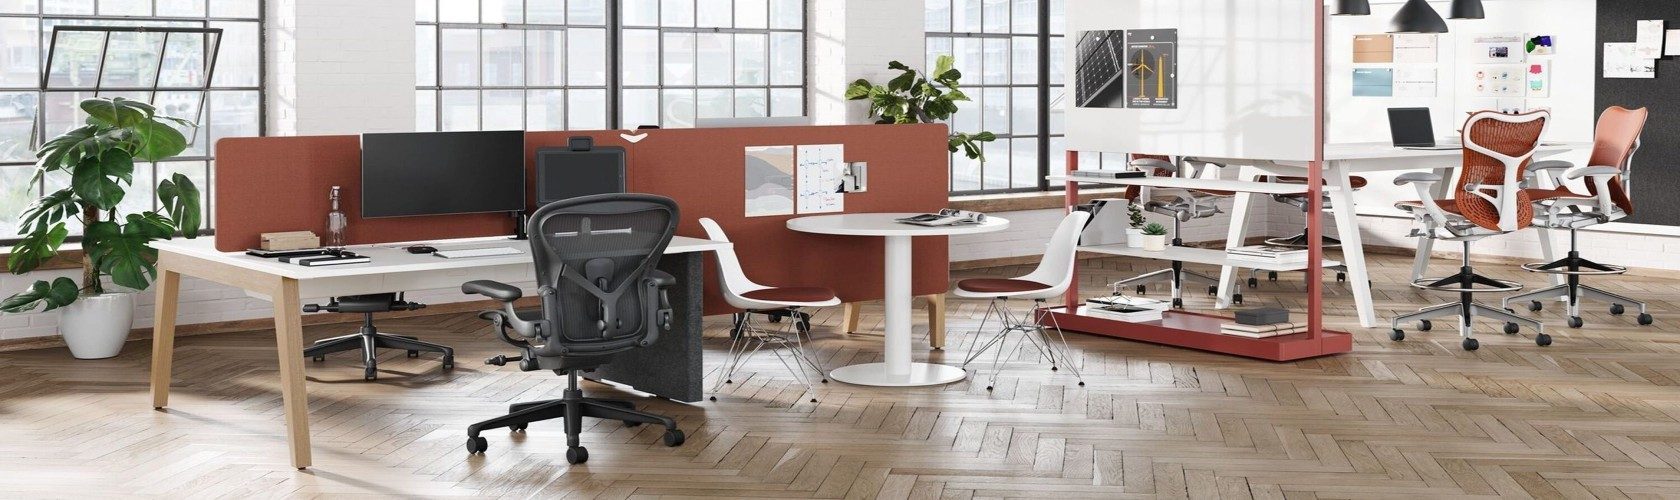 Contract Furniture New Zealand | Designer Office Furniture NZ